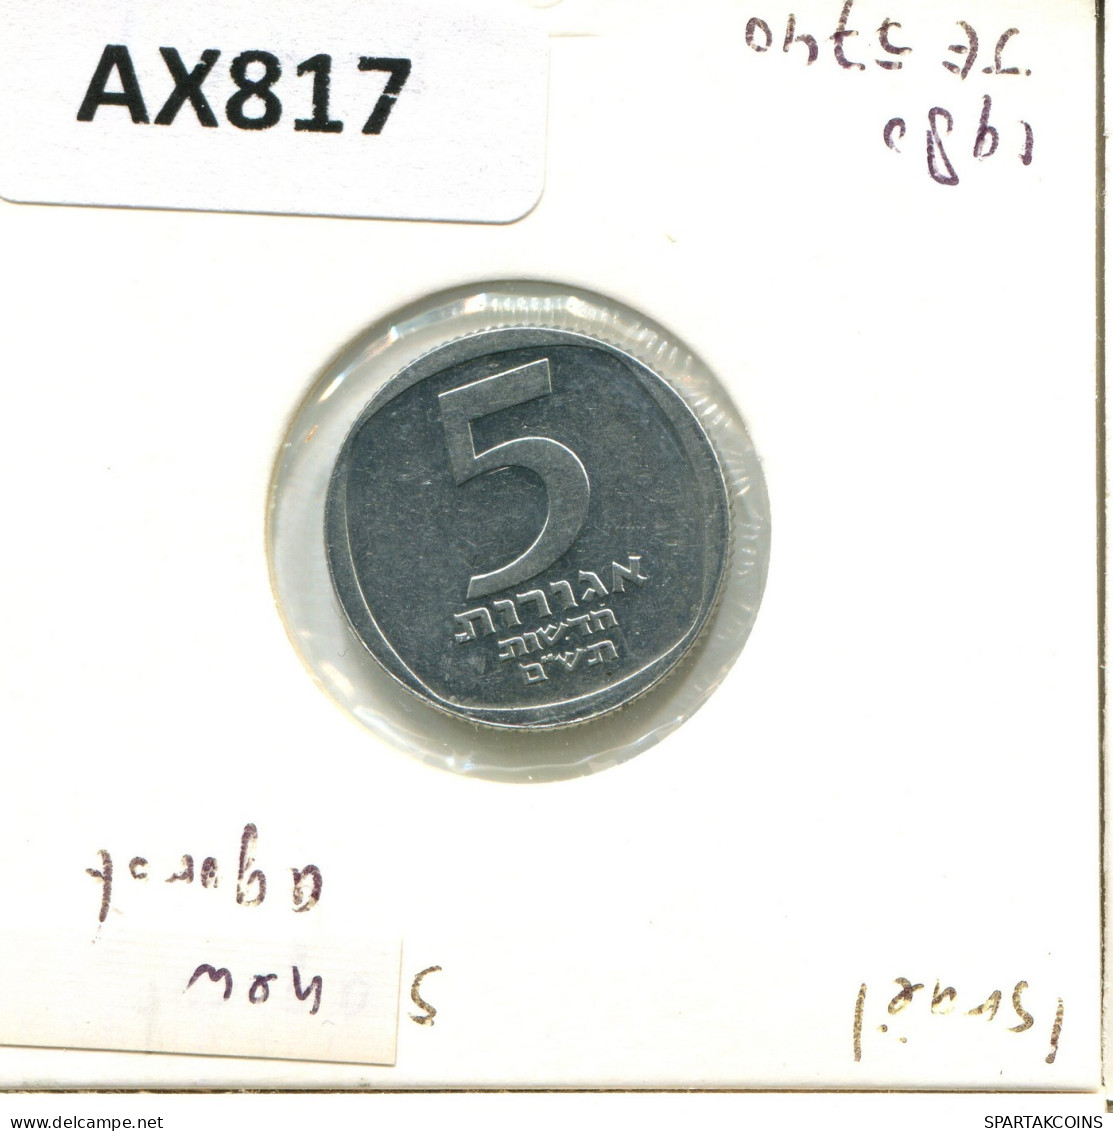 NEW AGOROT 1980 ISRAEL Coin #AX817.U.A - Israel